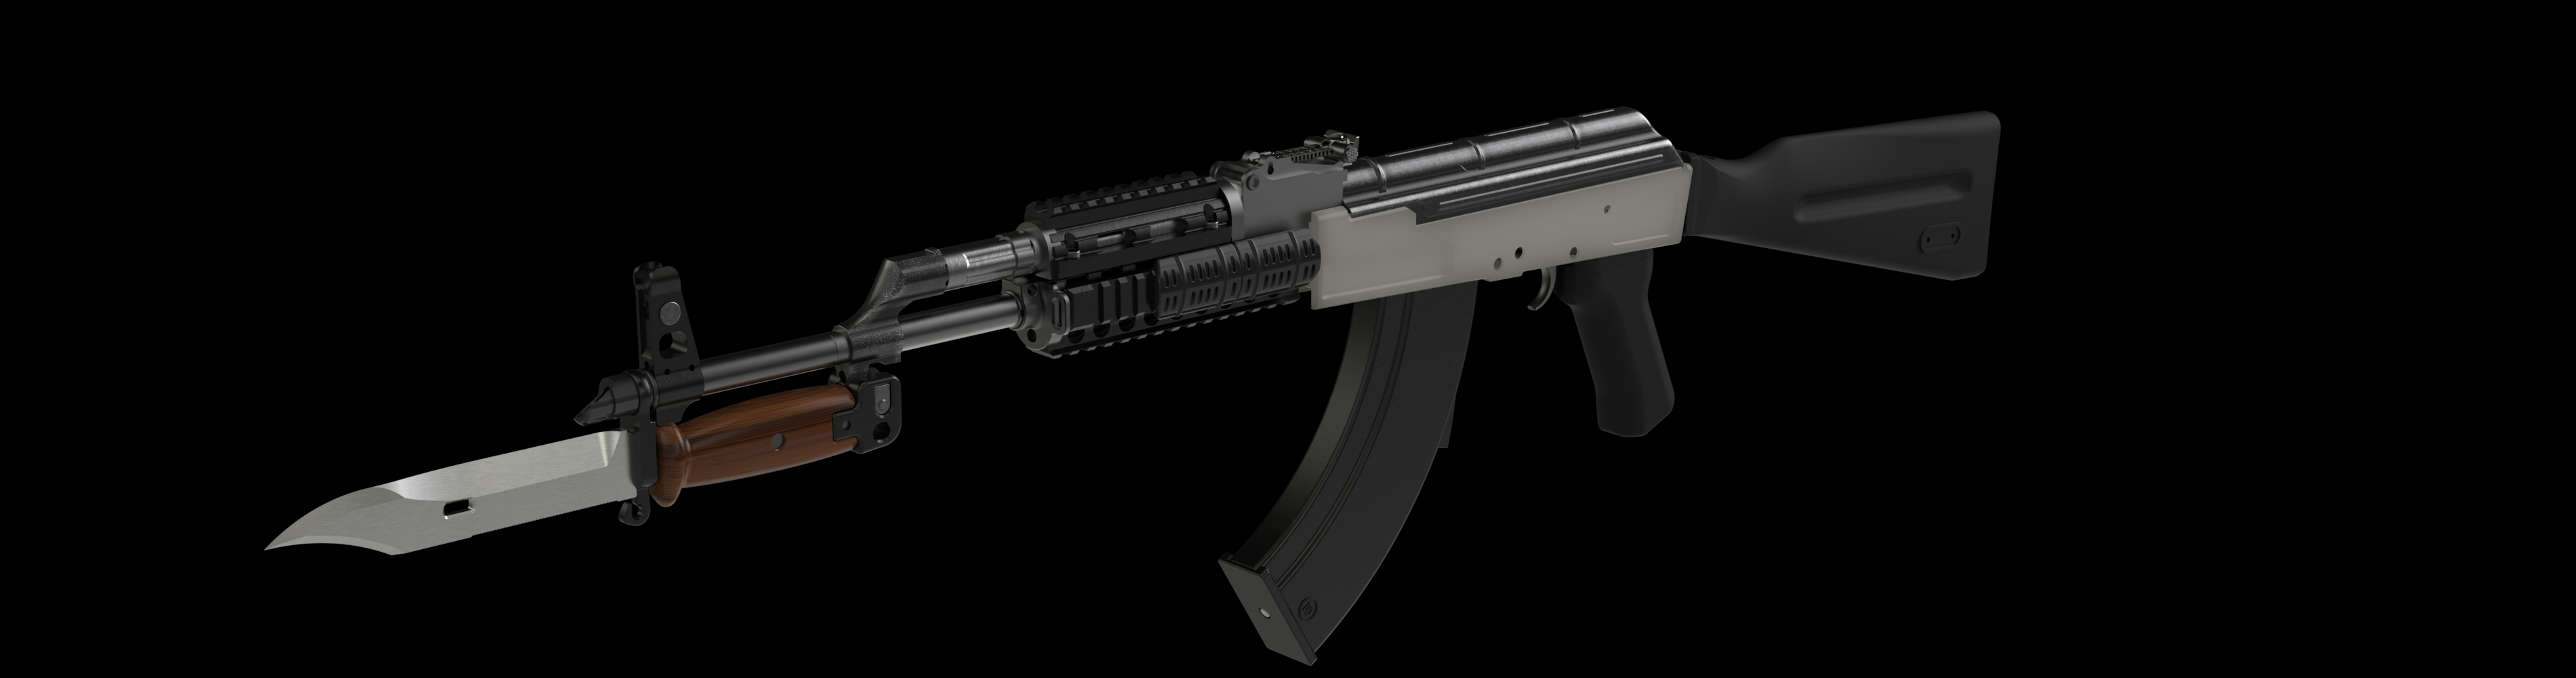 armslist-for-sale-ak-47-milled-receiver-blueprint